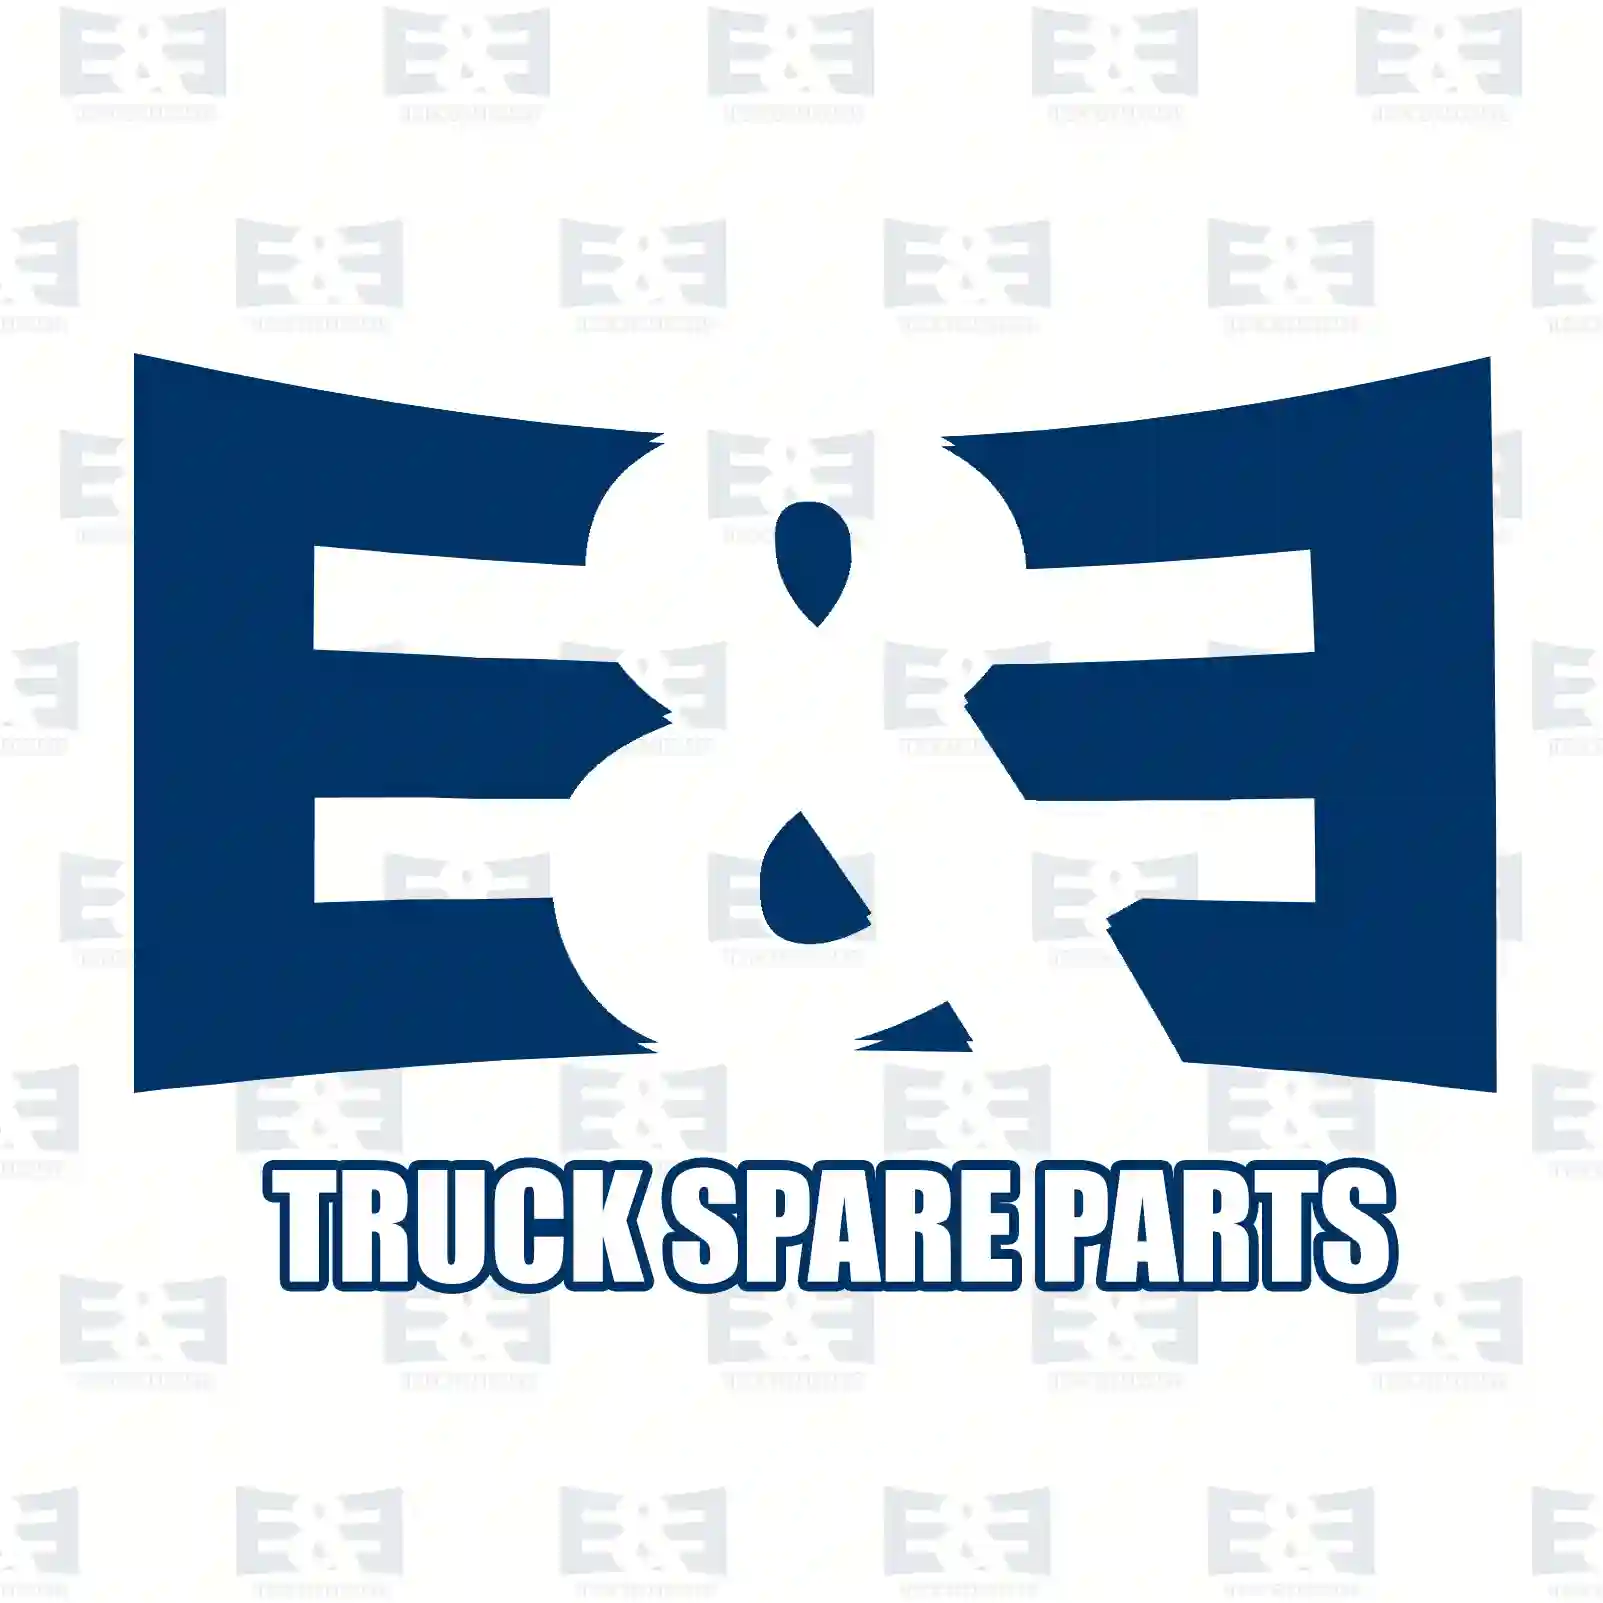 Brake disc, 2E2296337, #YOK ||  2E2296337 E&E Truck Spare Parts | Truck Spare Parts, Auotomotive Spare Parts Brake disc, 2E2296337, #YOK ||  2E2296337 E&E Truck Spare Parts | Truck Spare Parts, Auotomotive Spare Parts